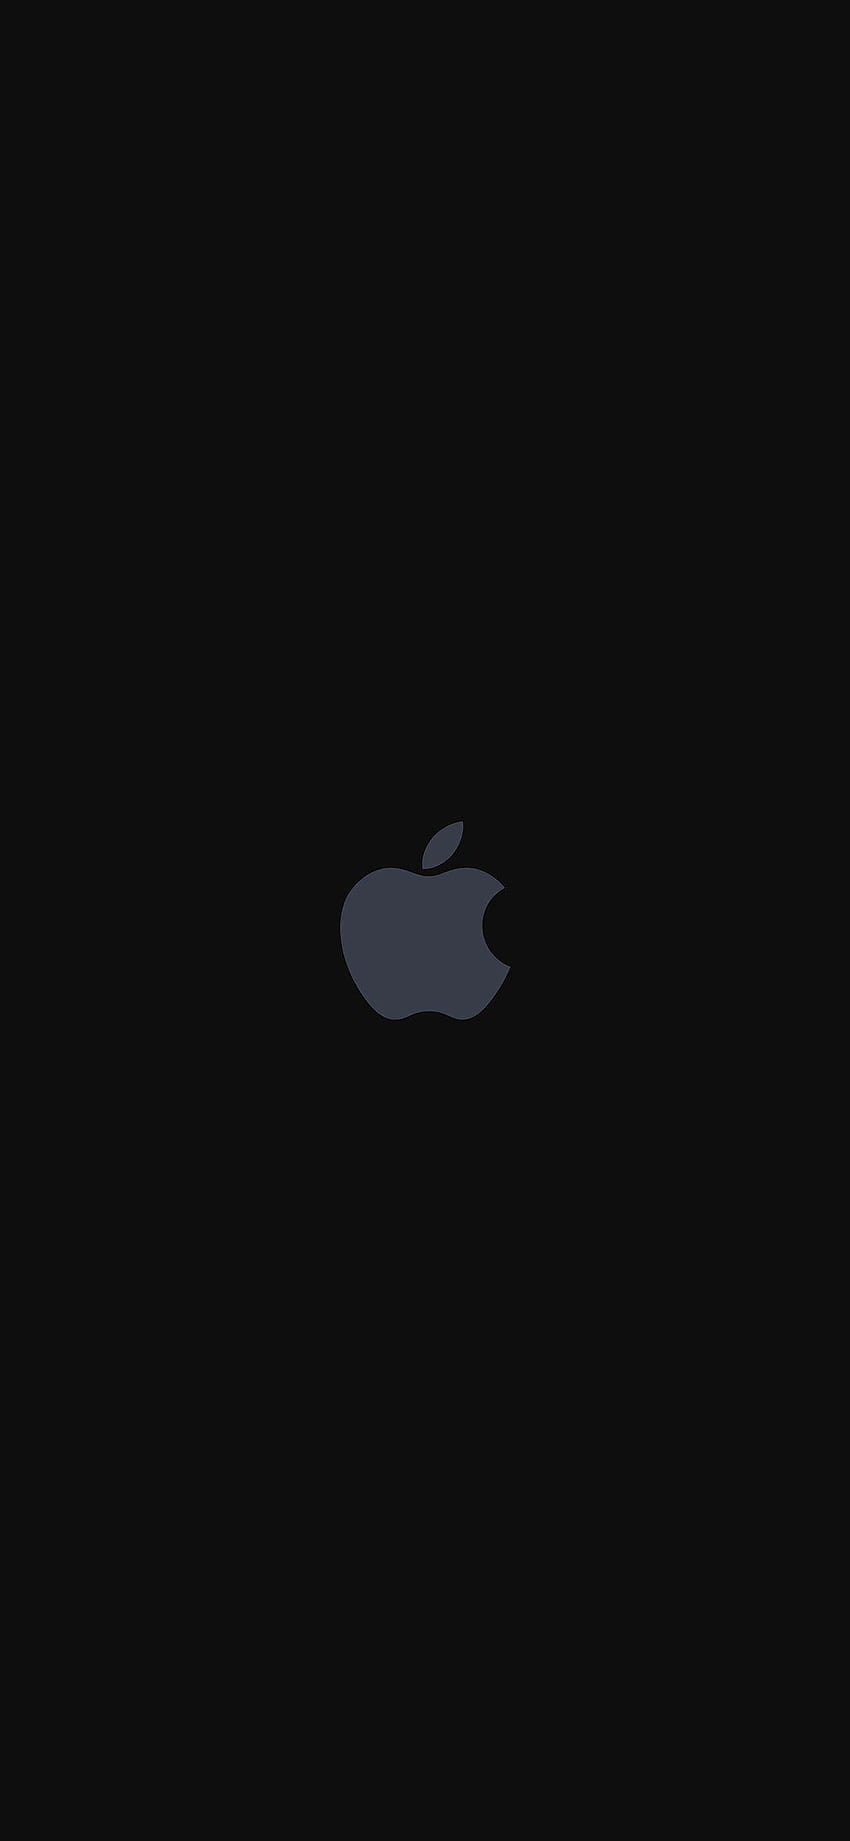 Premium Photo | A gold apple logo on a black background